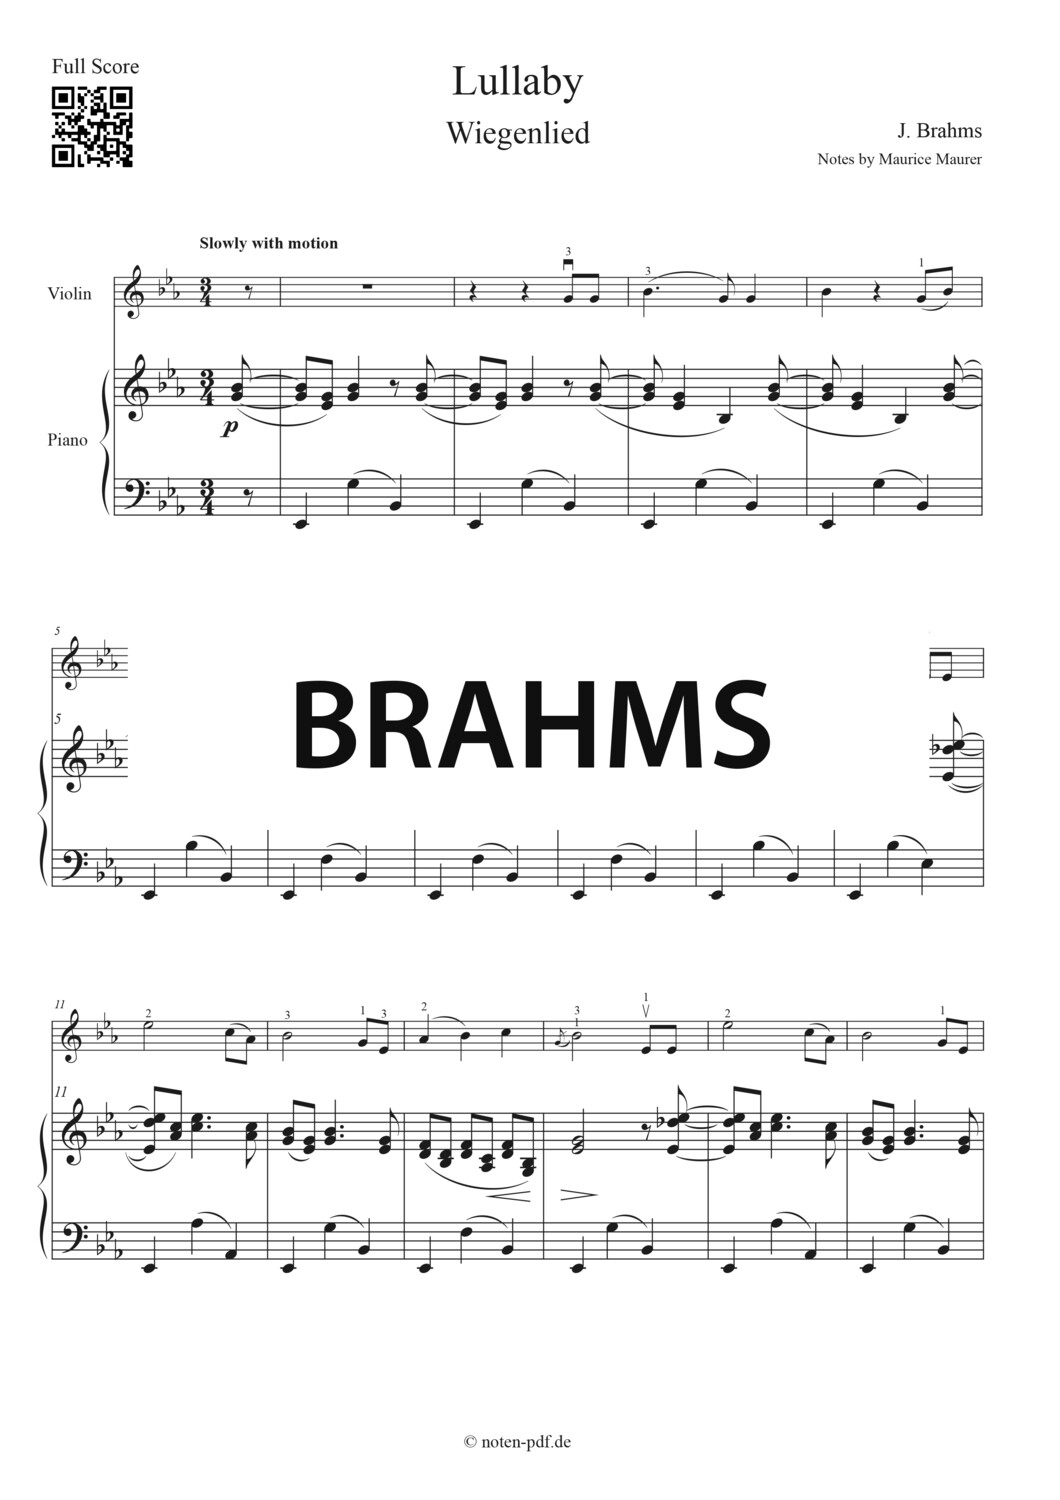 Brahms: Lullaby (Wiegenlied) + MP3